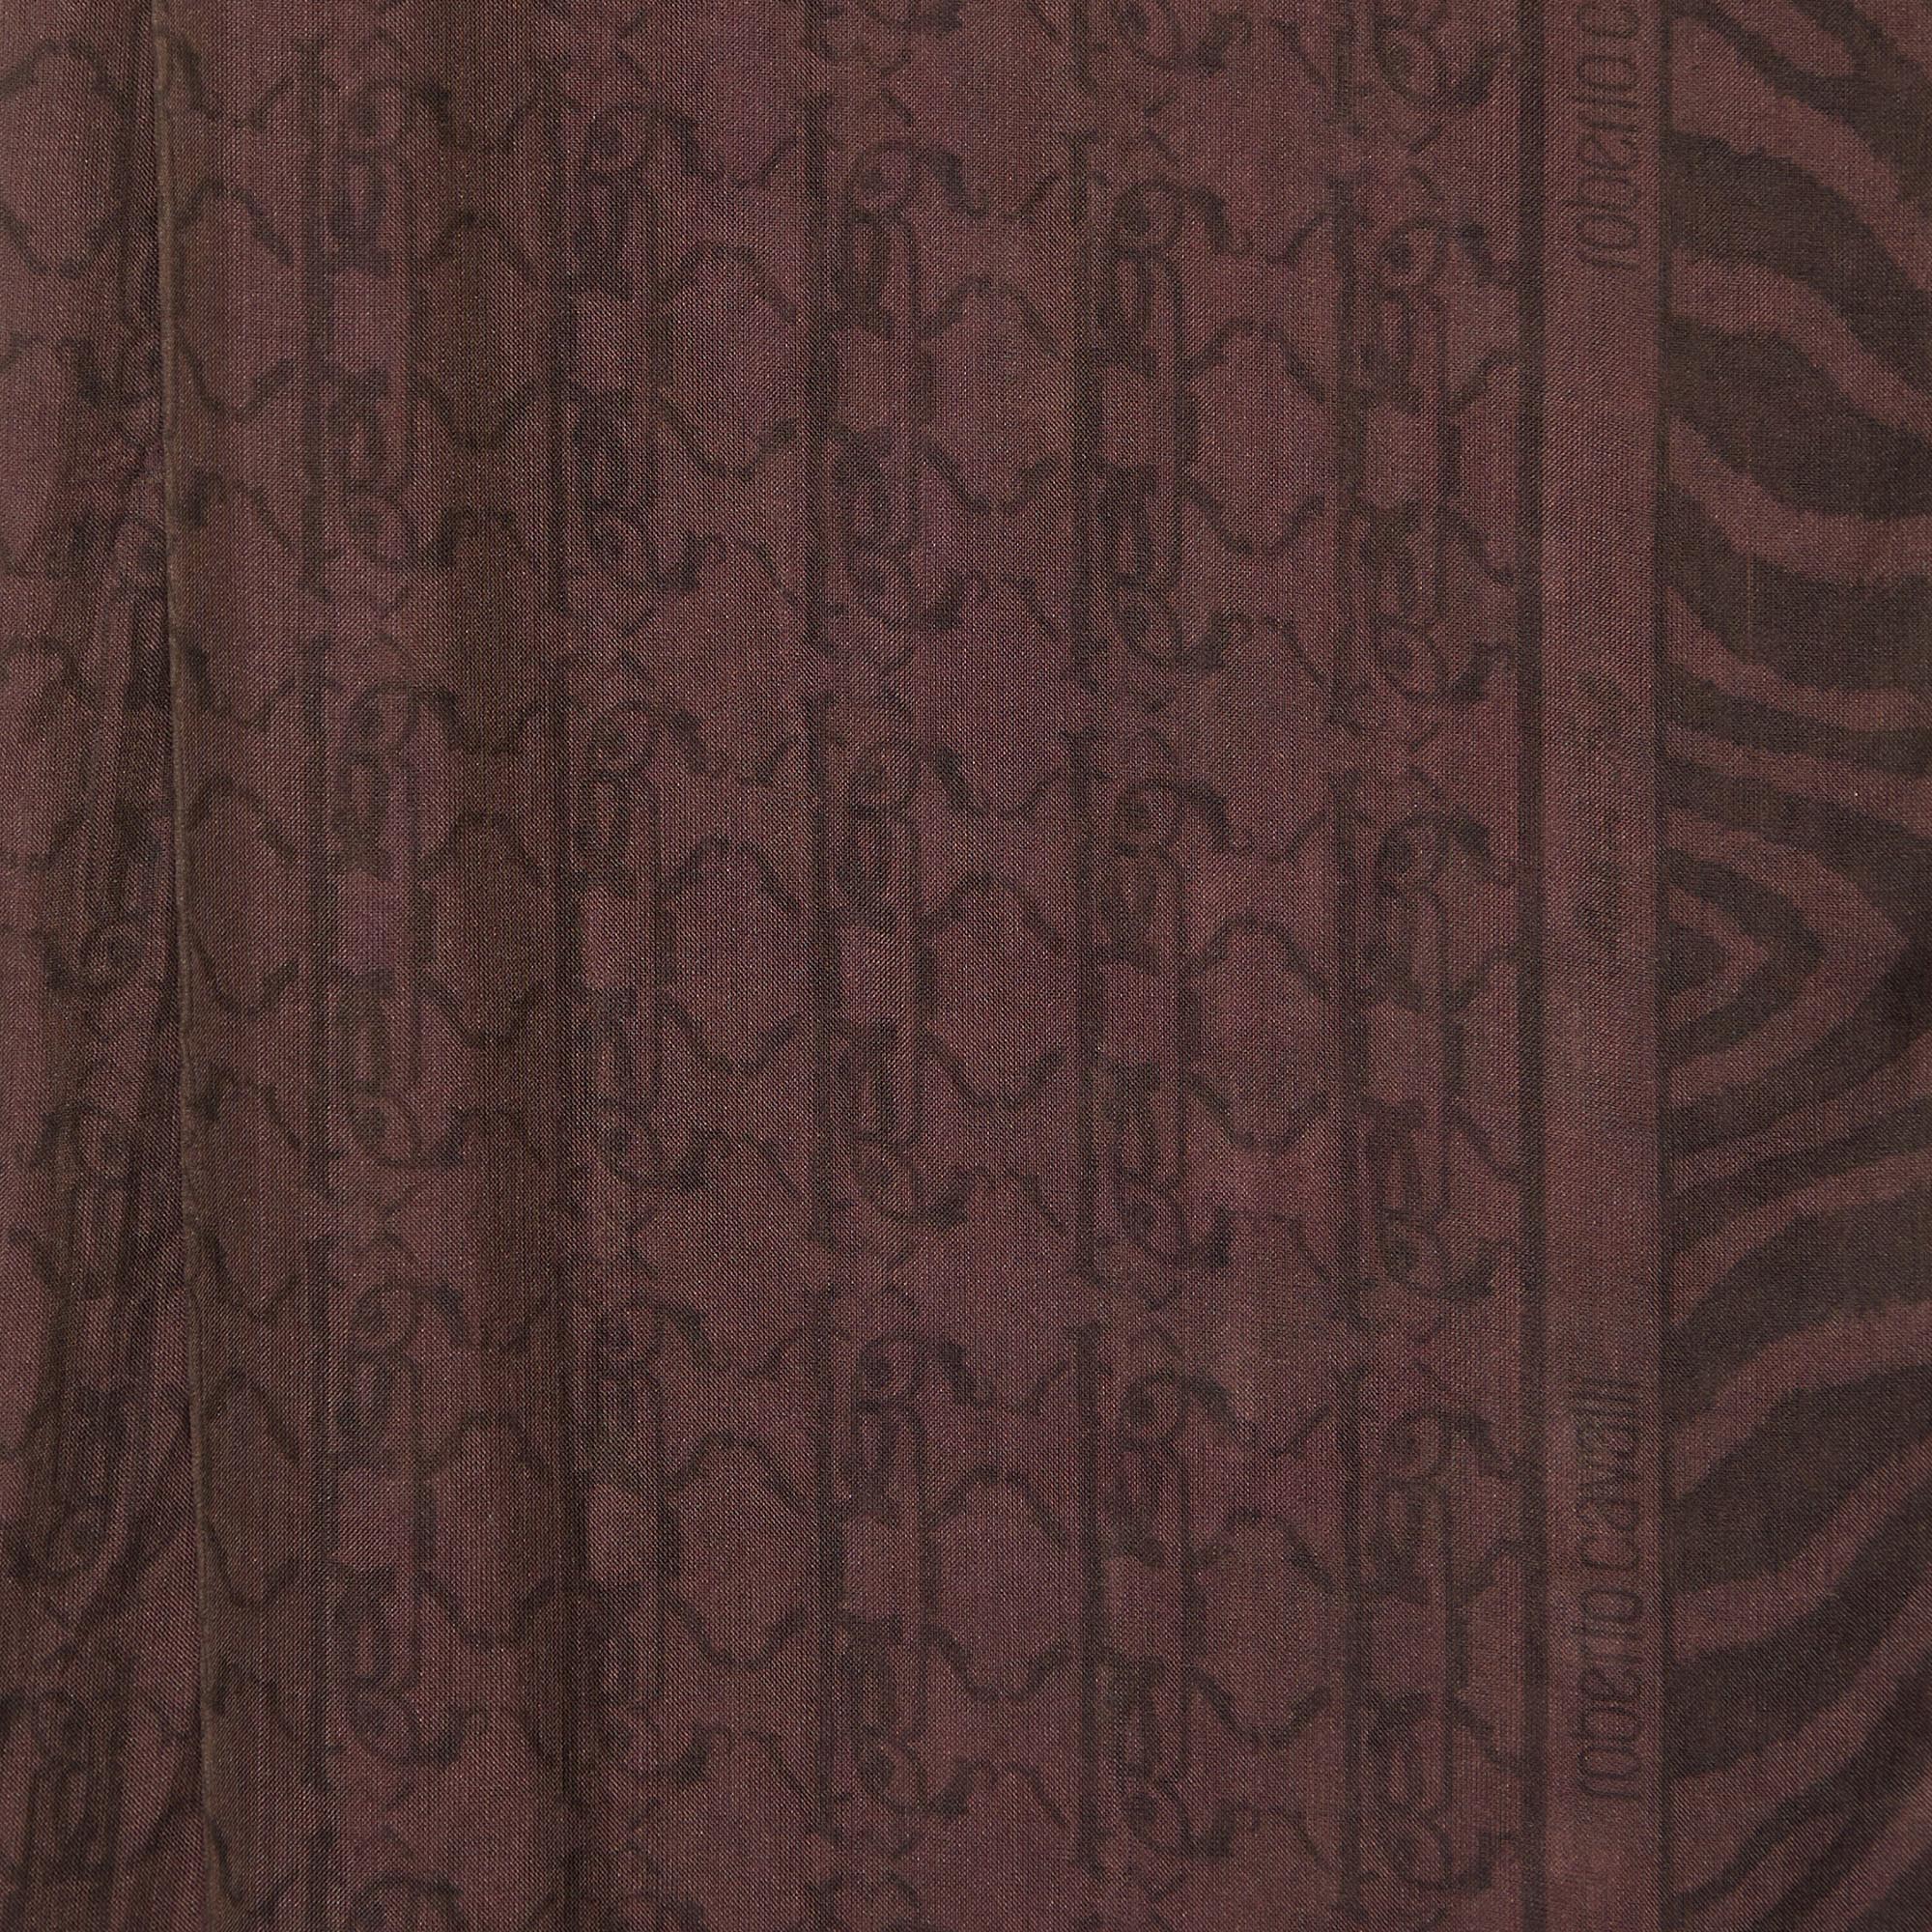 Roberto Cavalli Burgundy Printed Silk Stole